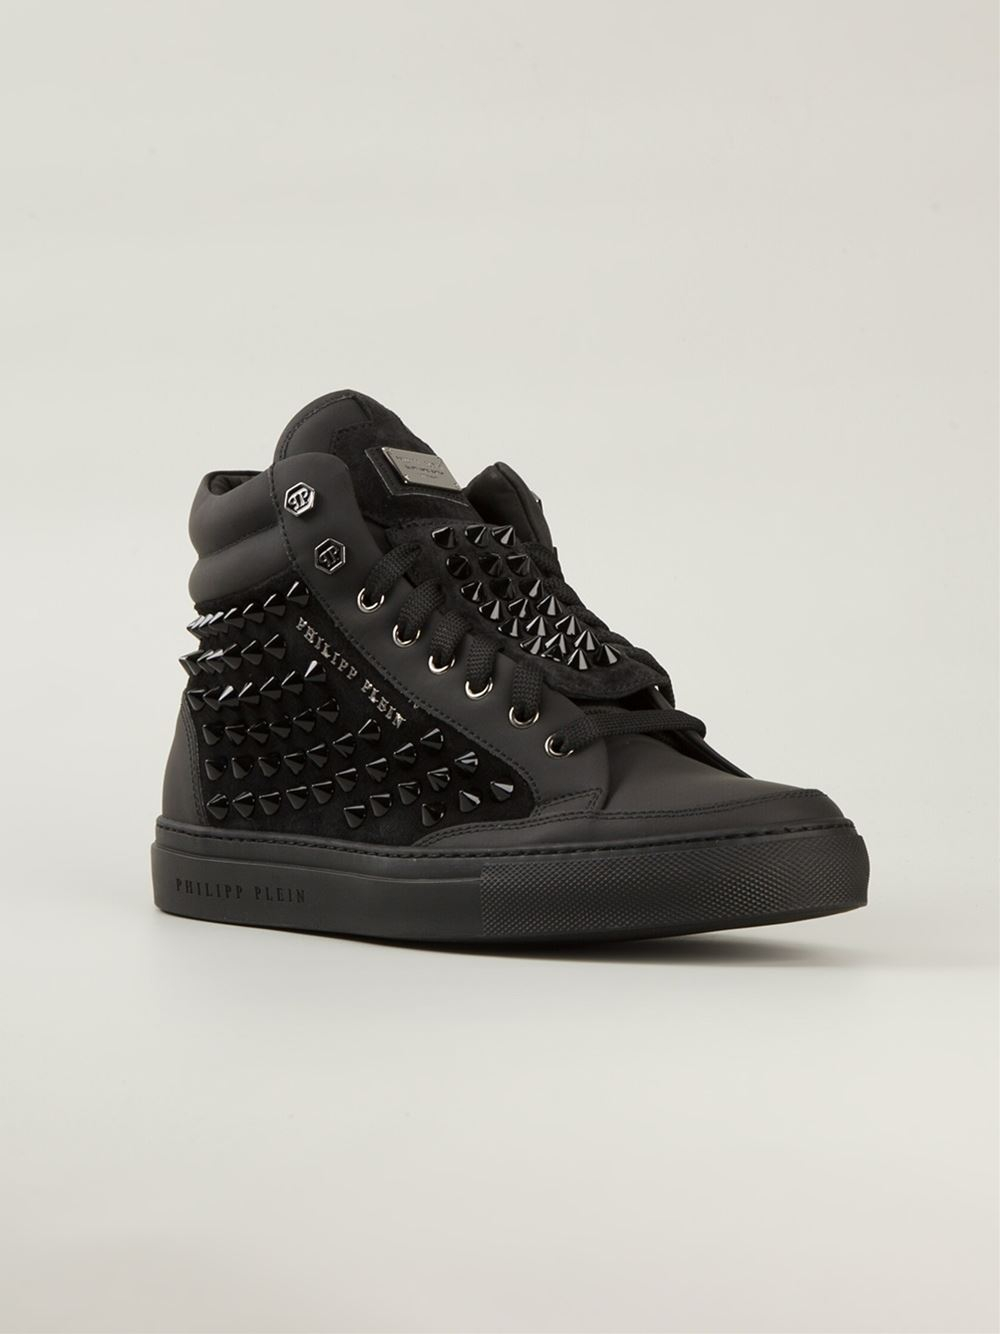 Lyst - Philipp Plein Concept High-Top Sneakers in Black ...